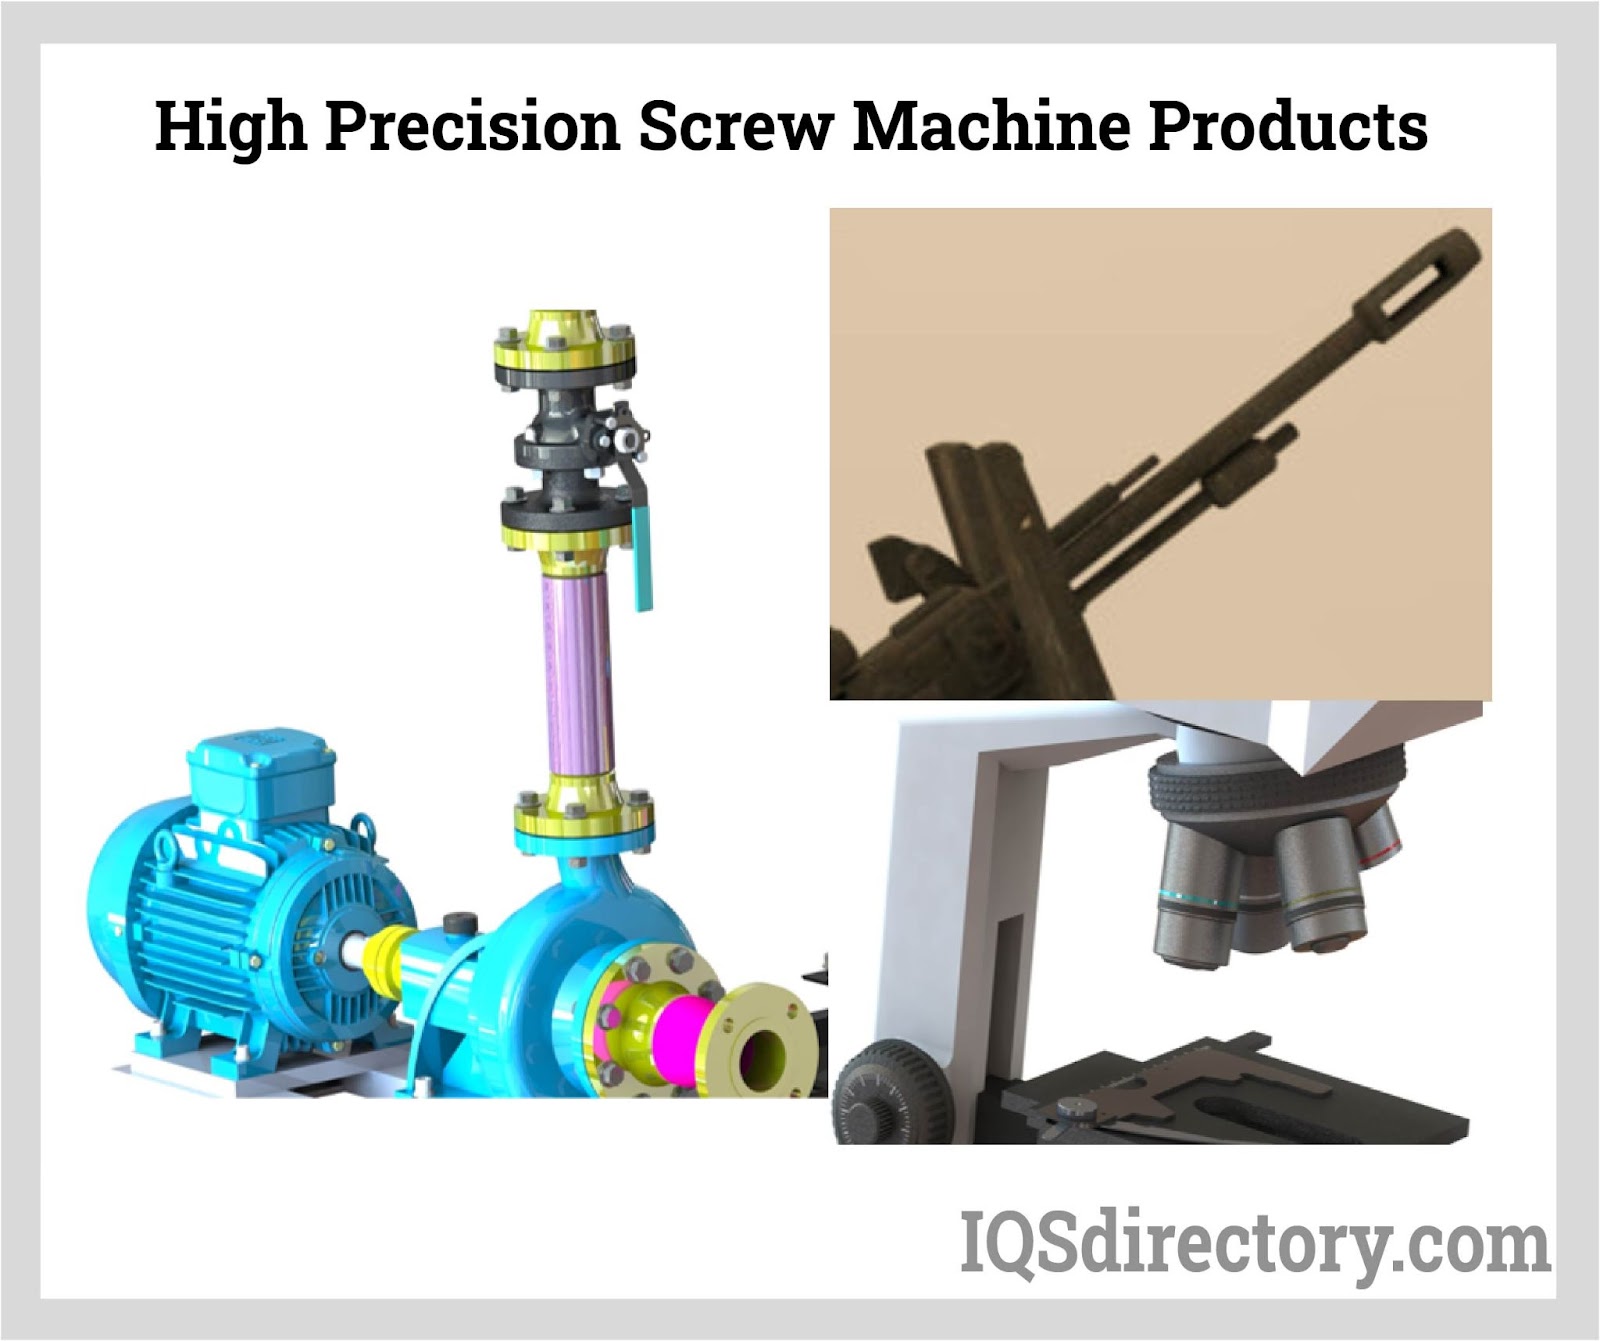 High Precision Screw Machine Products